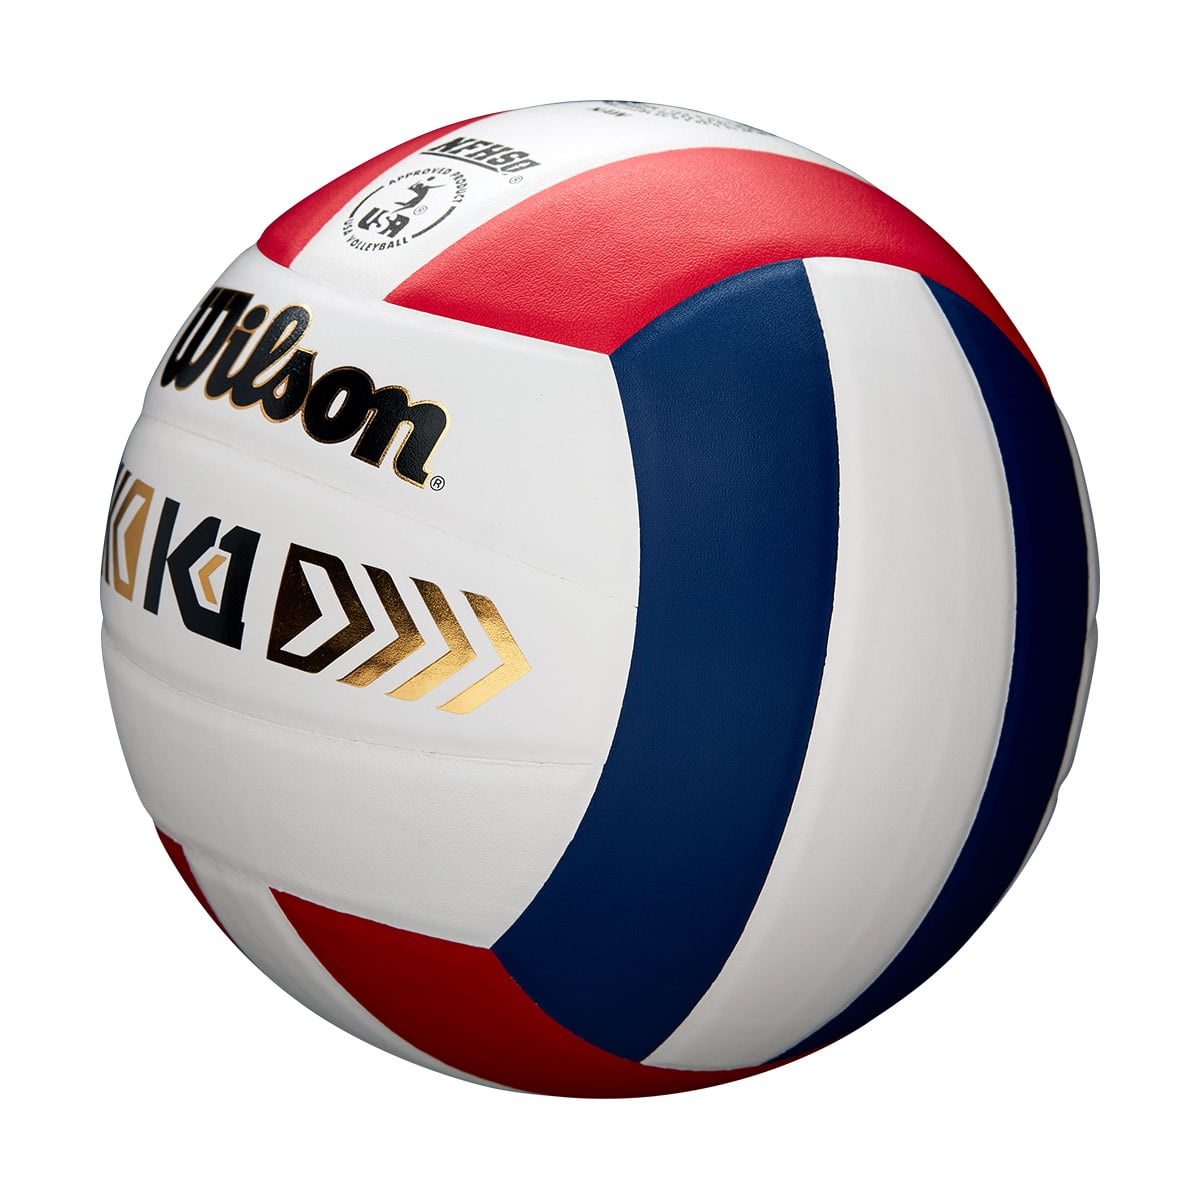 Wilson K1 Gold Volleyball